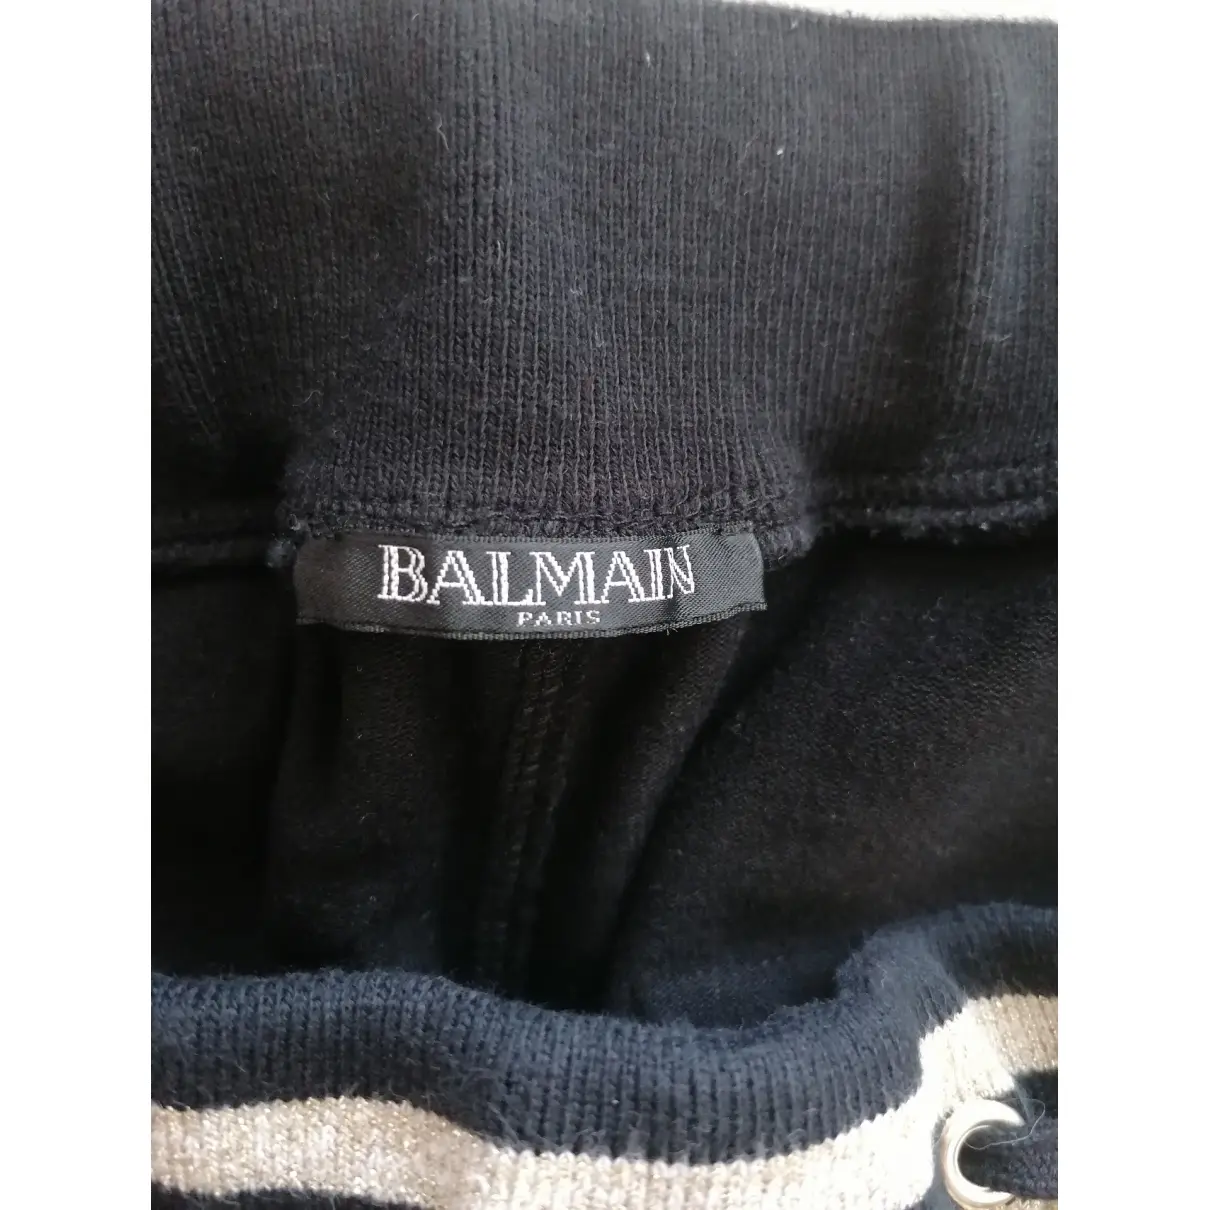 Buy Balmain Trousers online